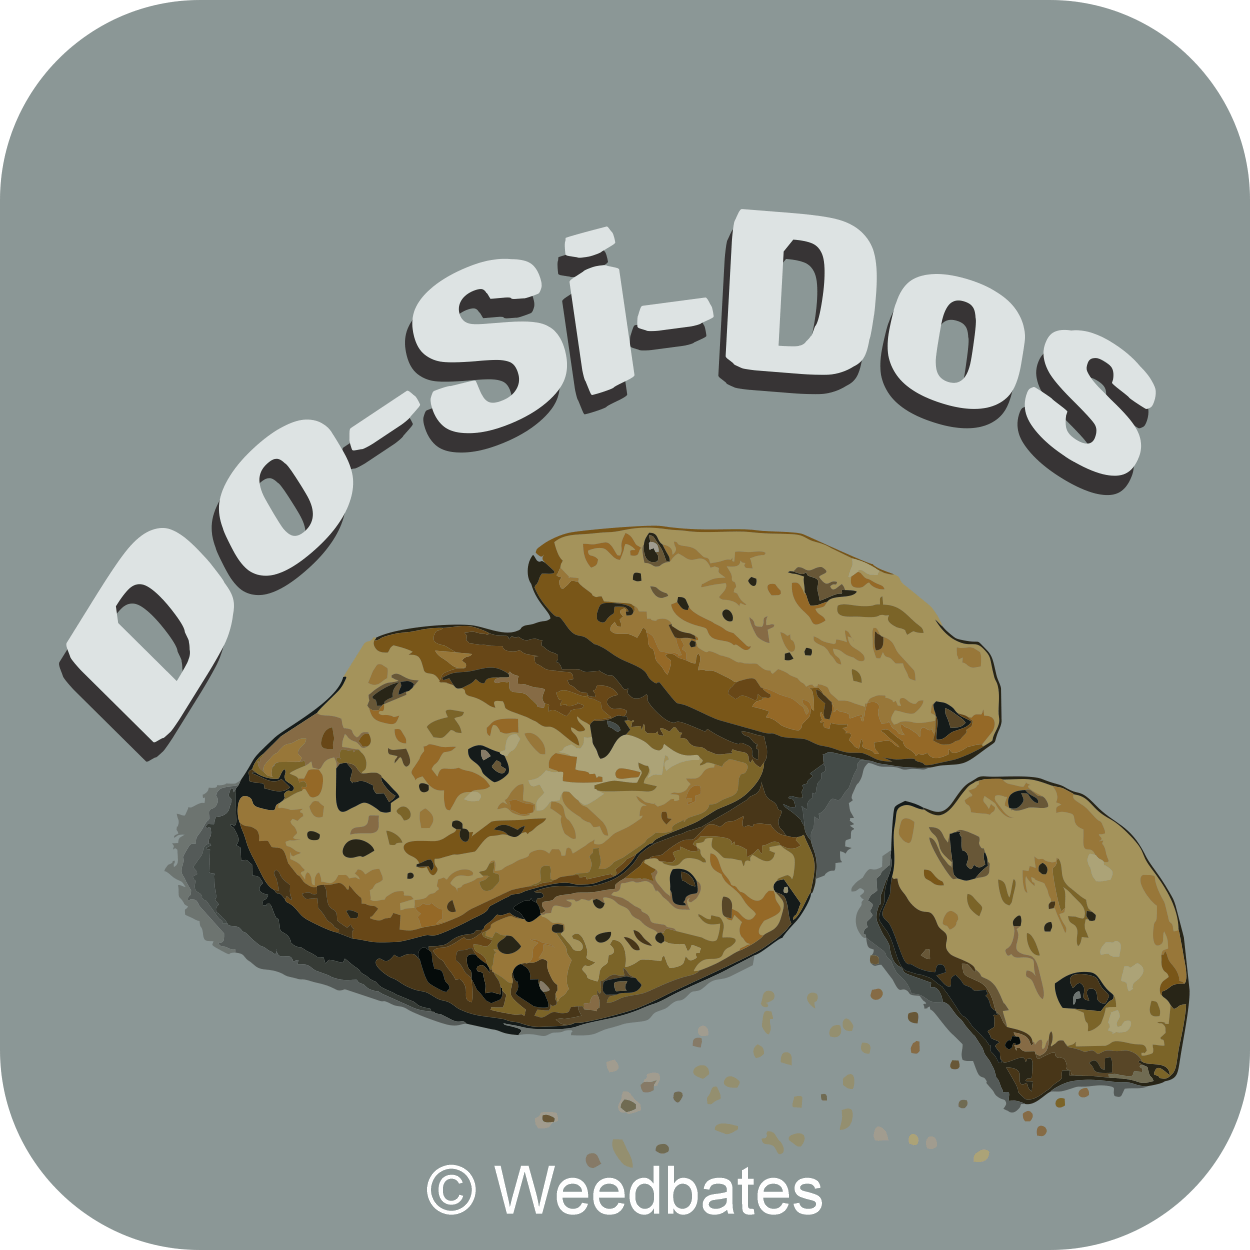 Do-Si-Dos cannabis strain